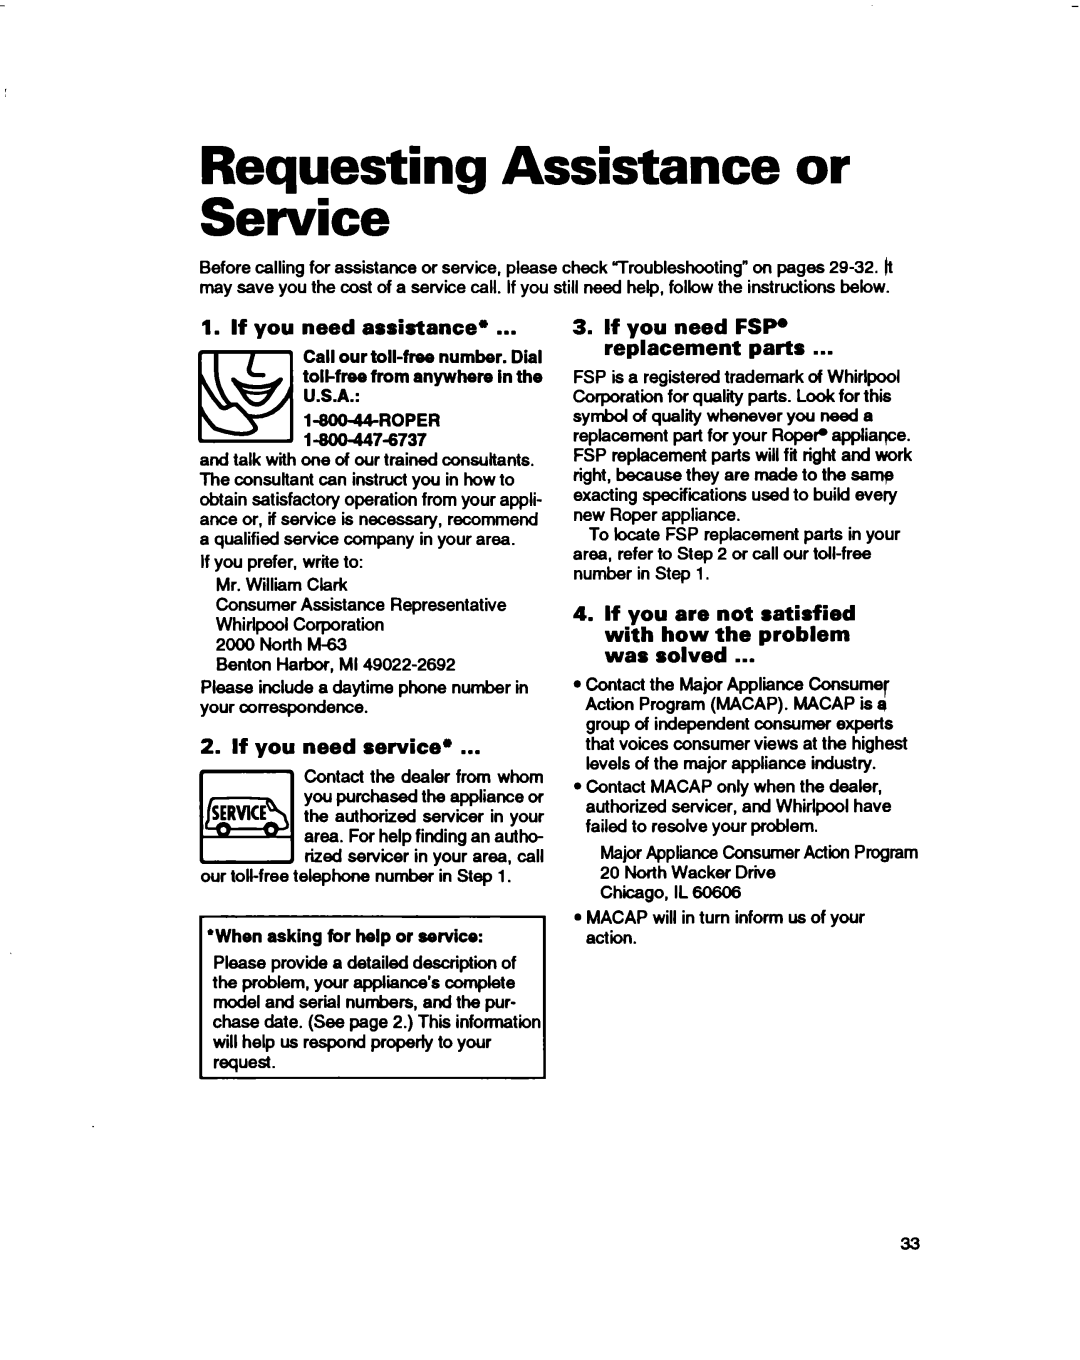 Whirlpool 3396314 warranty Reauestina Assistance or, Service w, If you need assistance, If you need service, U.S.A 